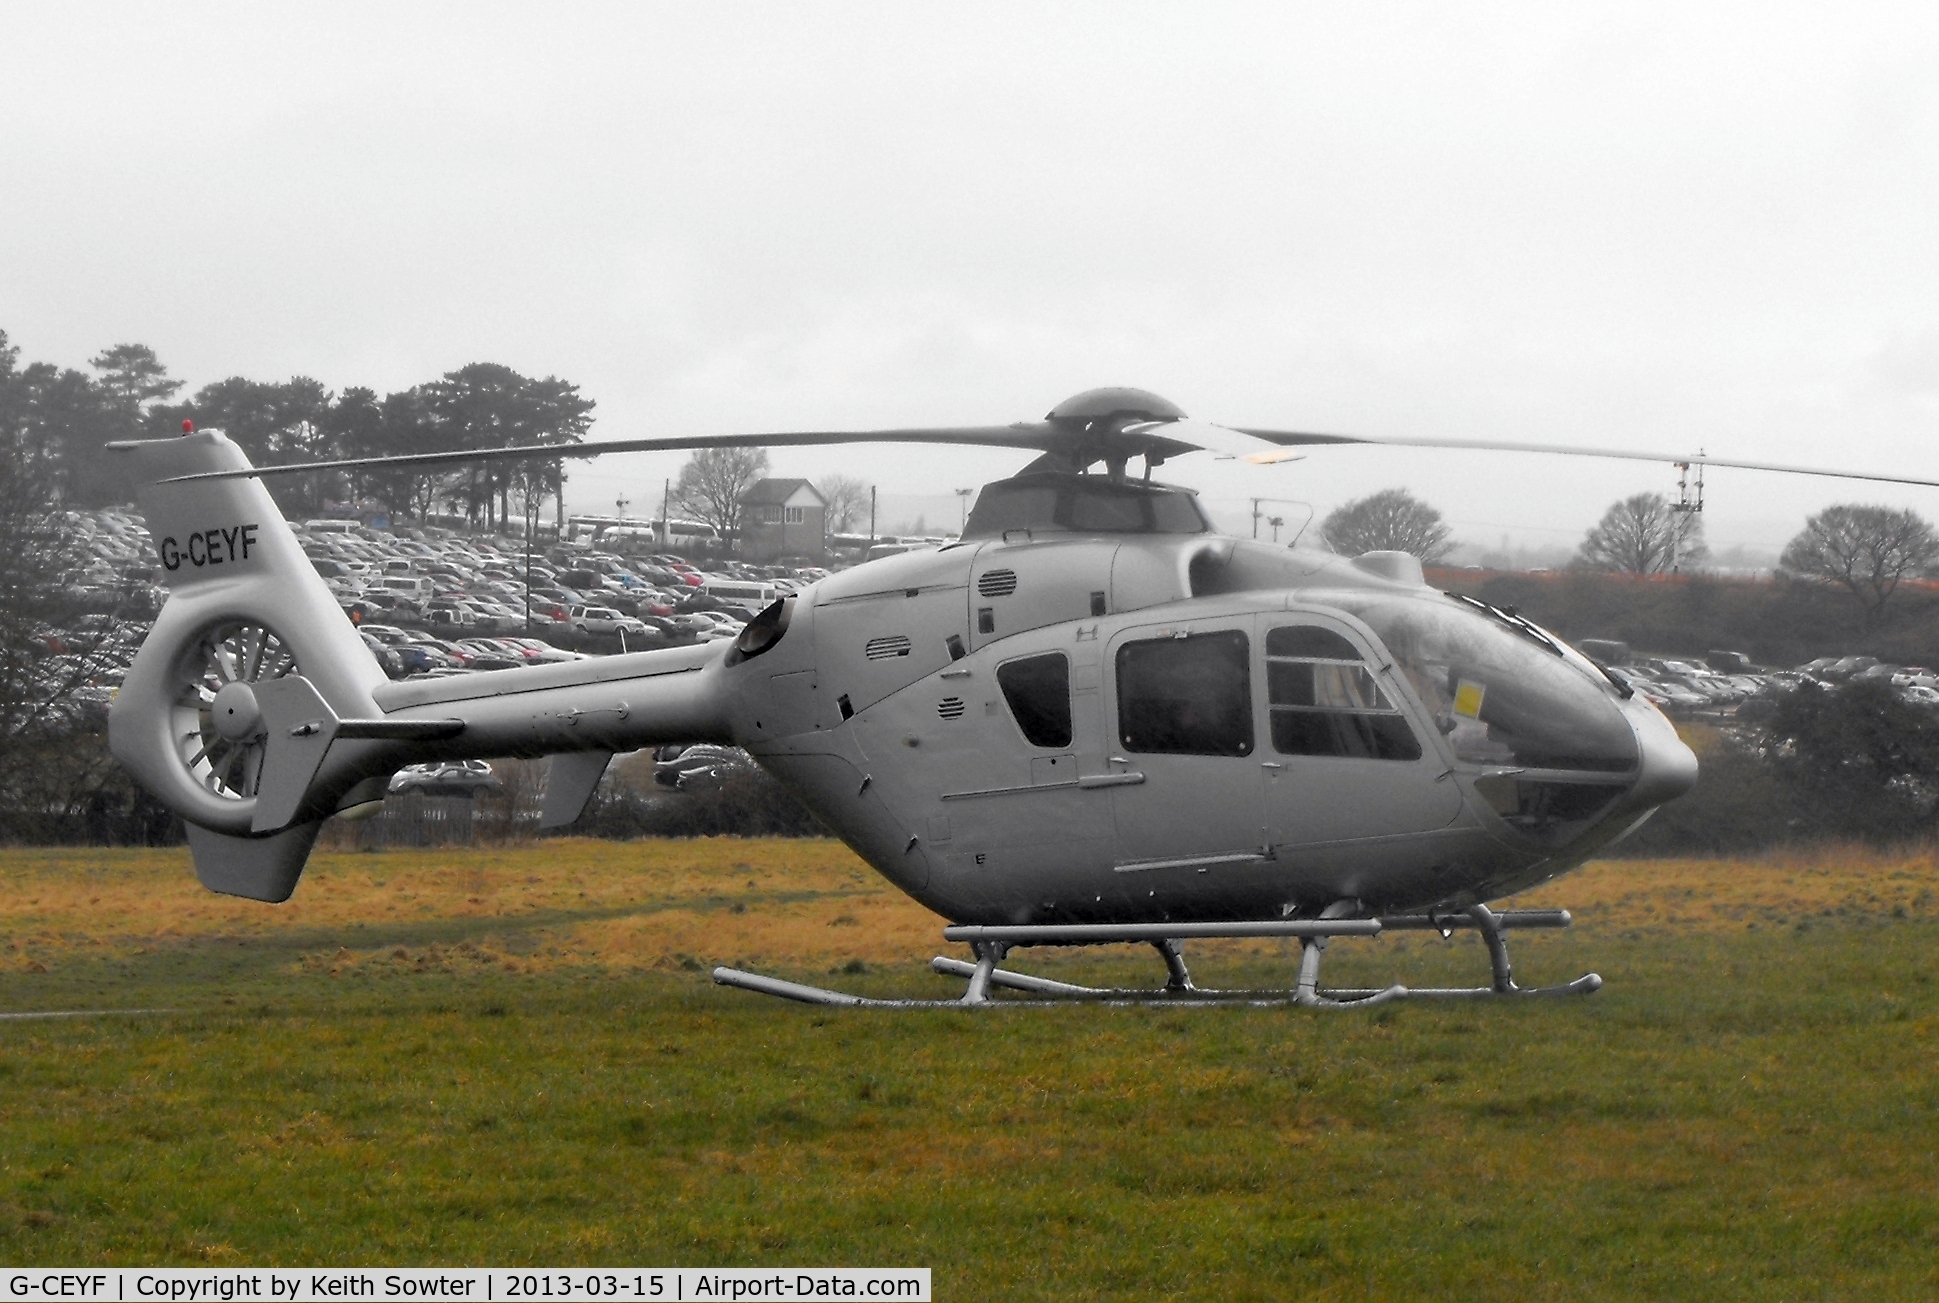 G-CEYF, 1999 Eurocopter EC-135T-1 C/N 0115, Visiting Cheltenham Racecourse